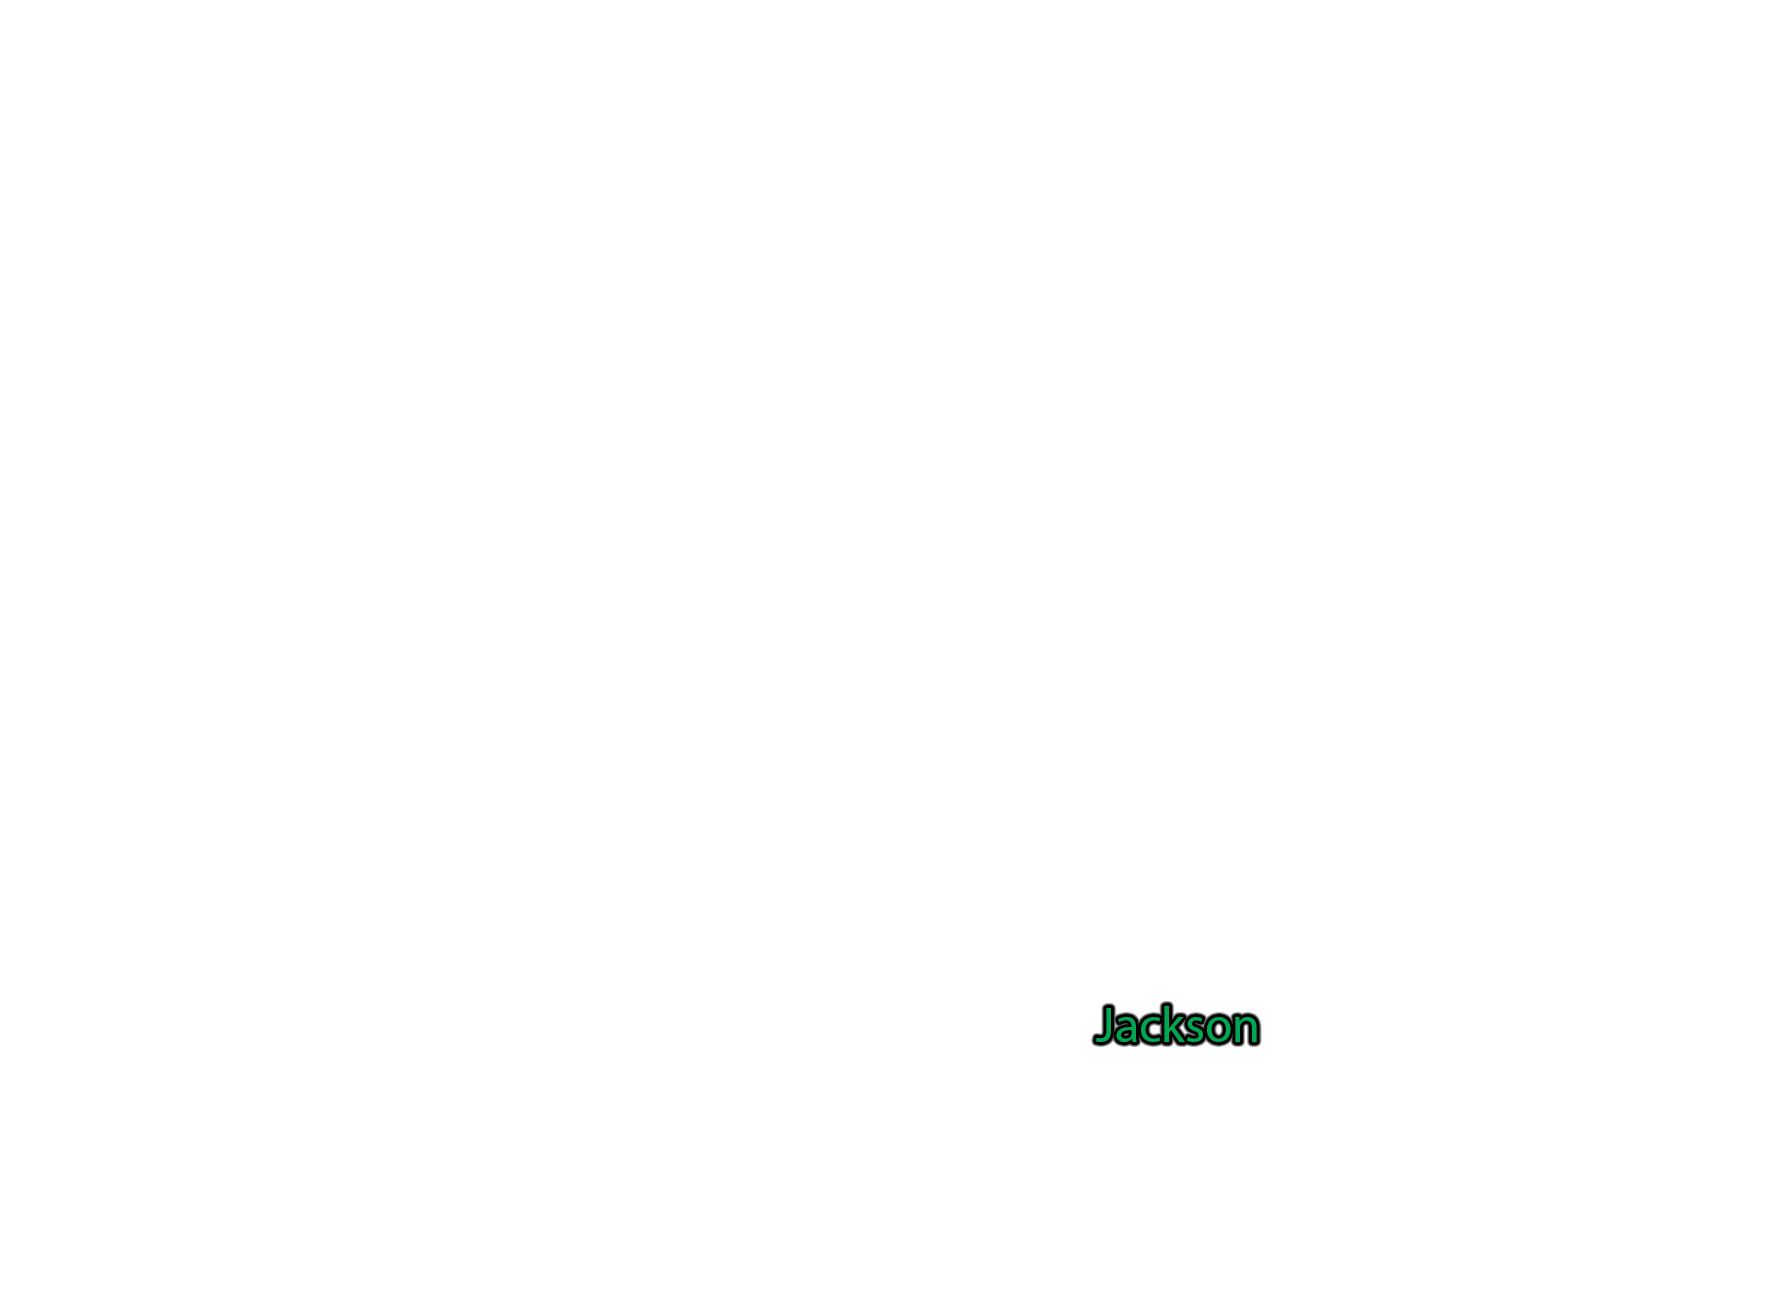 Jackson label with glow